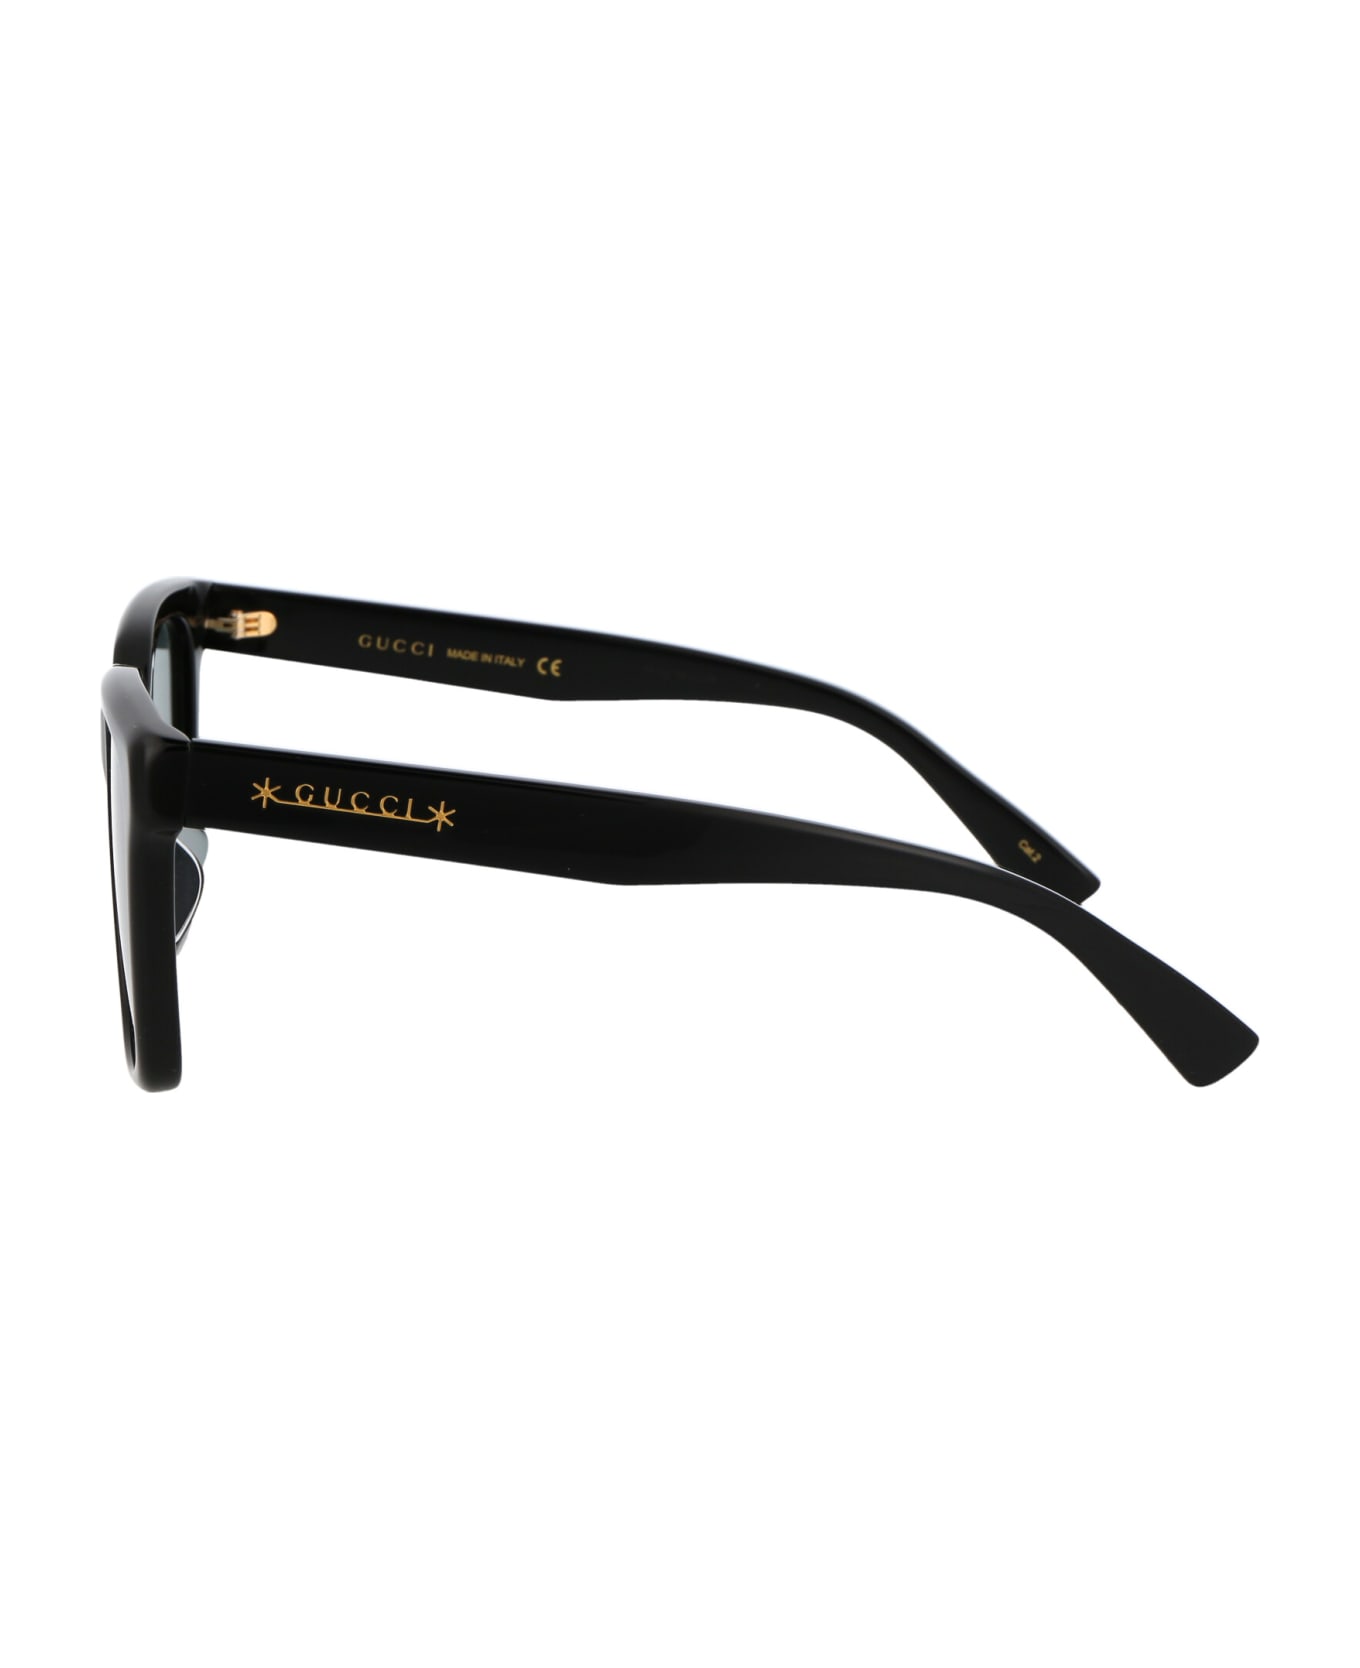 Gucci Eyewear Gg1175sk Sunglasses - 002 BLACK BLACK SMOKE サングラス